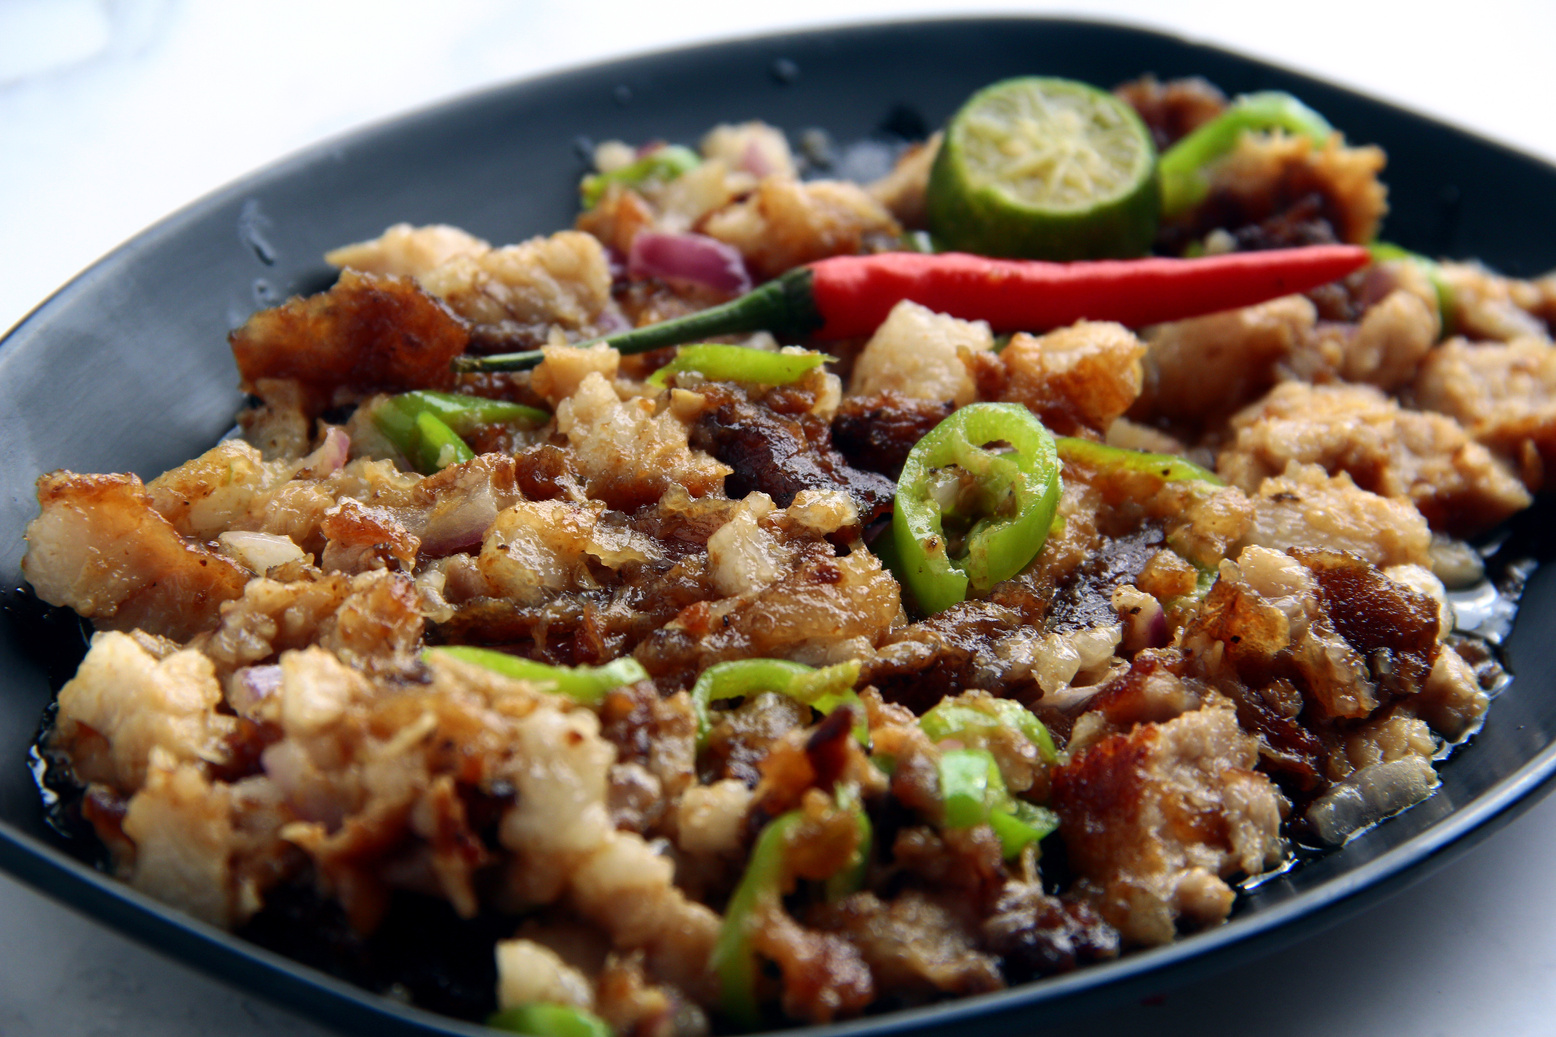 reshly cooked Filipino food called Pork Sisig